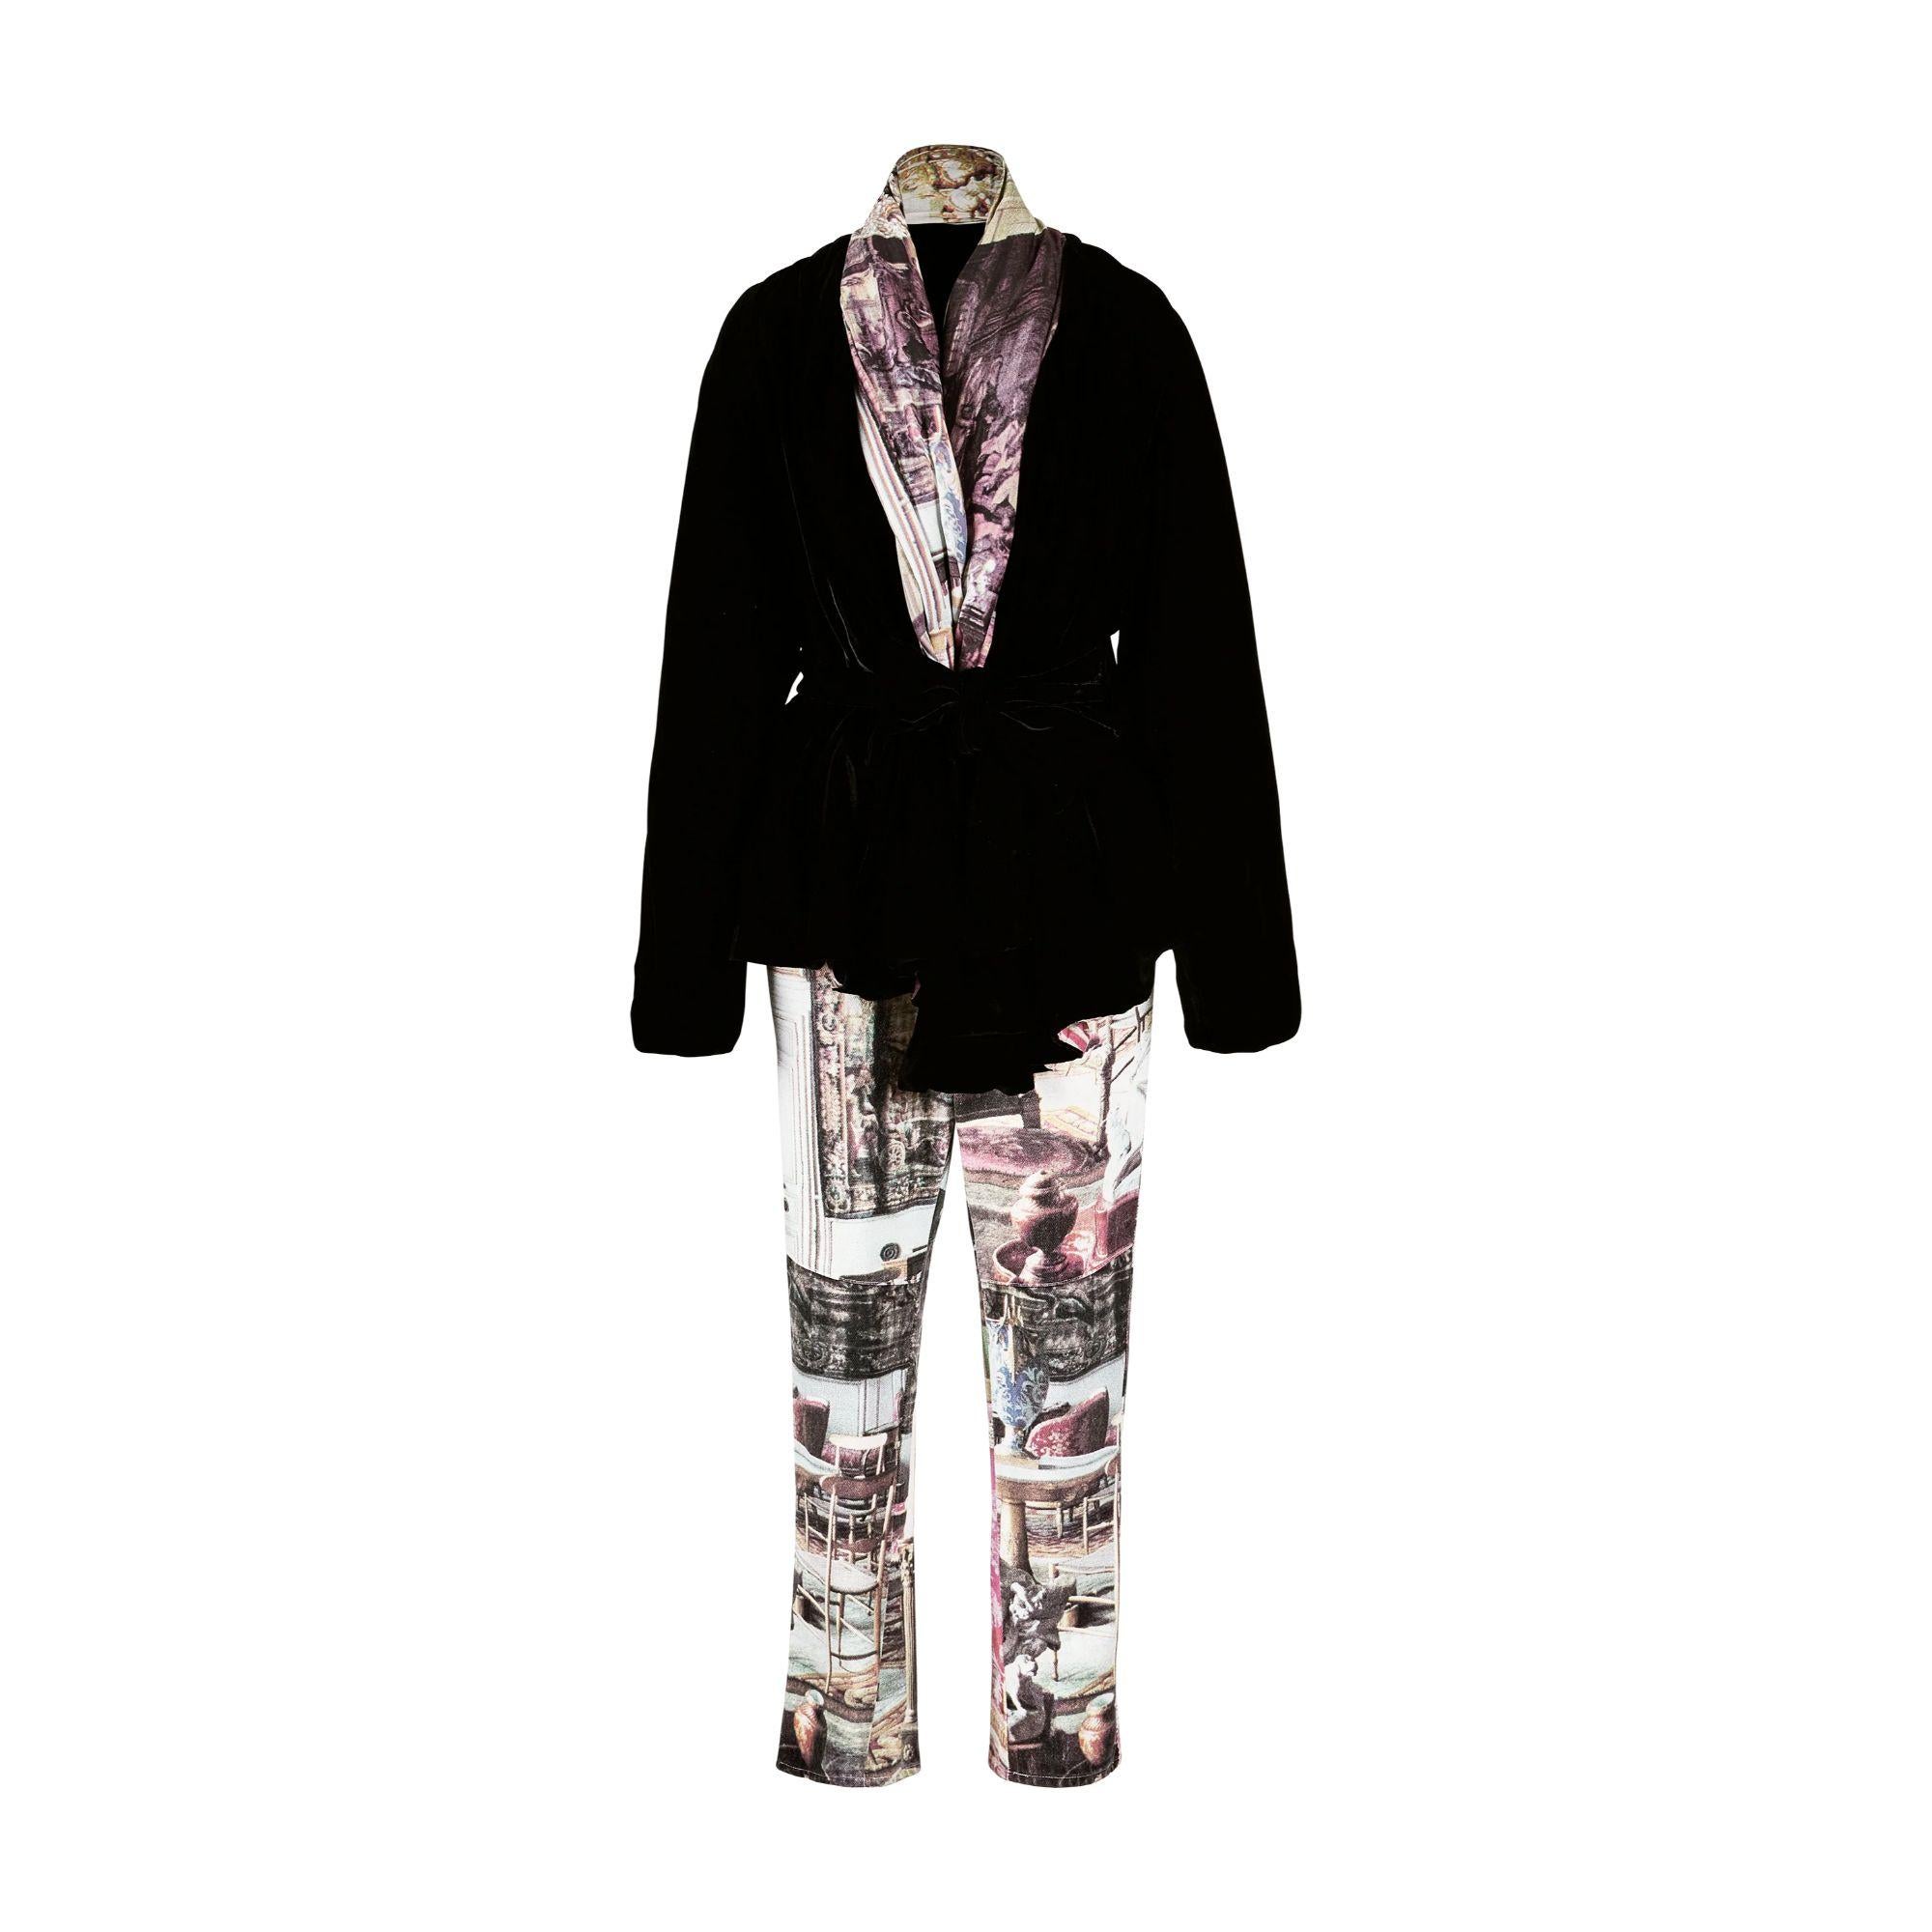 Women's S/S 1992 Vivienne Westwood 'Salon' Collection Printed Velvet Shawl Jacket